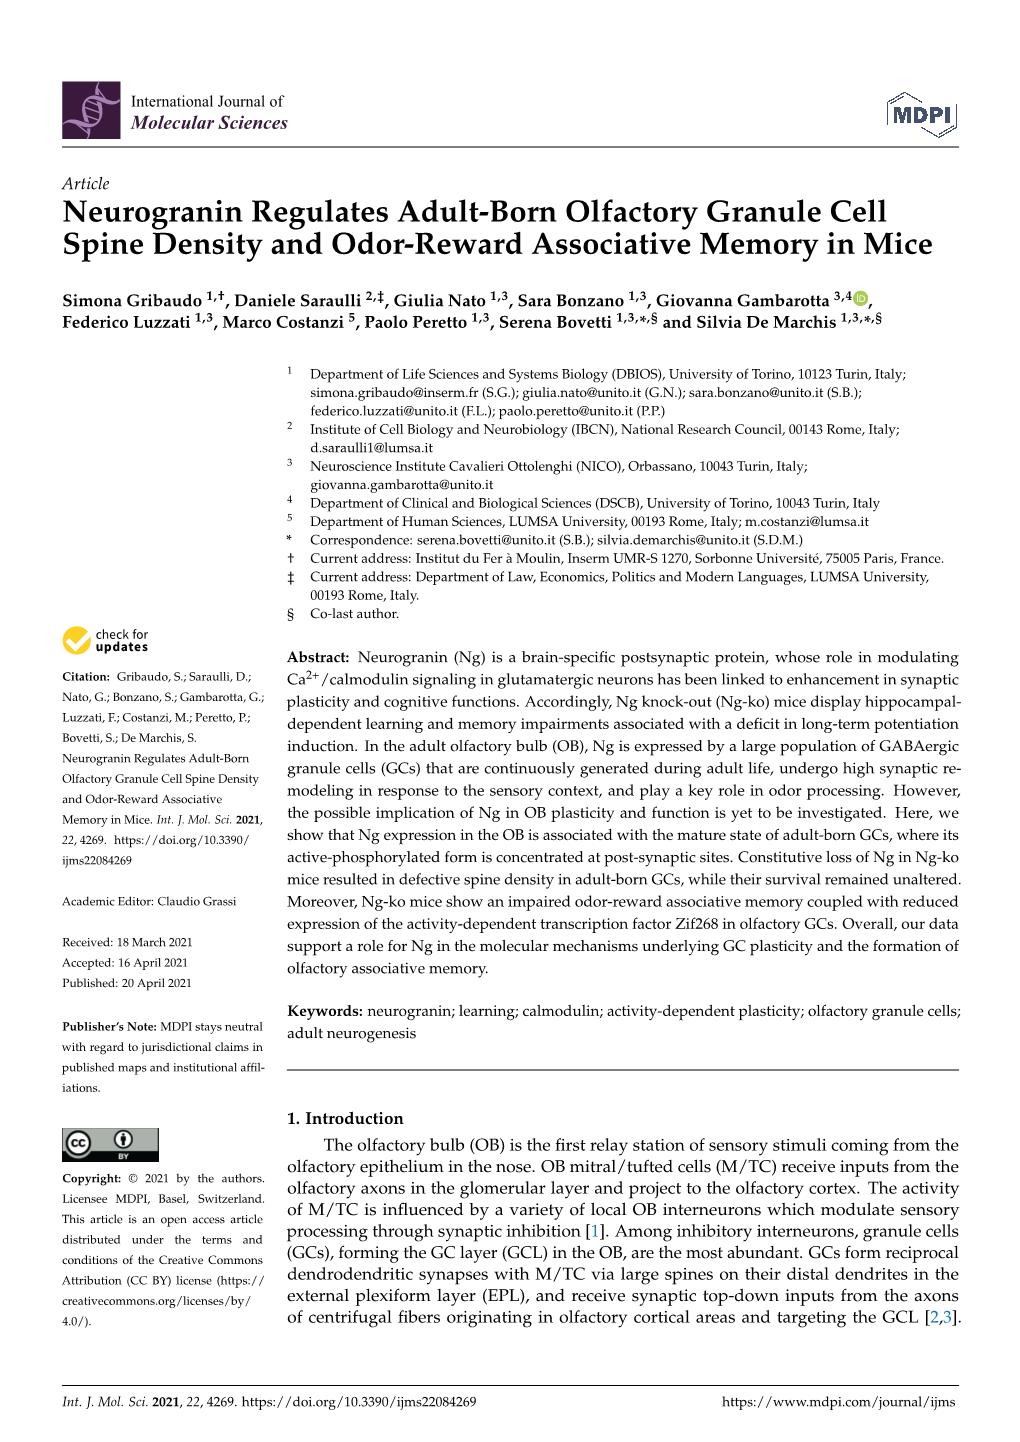 Neurogranin Regulates Adult-Born Olfactory Granule Cell Spine Density and Odor-Reward Associative Memory in Mice